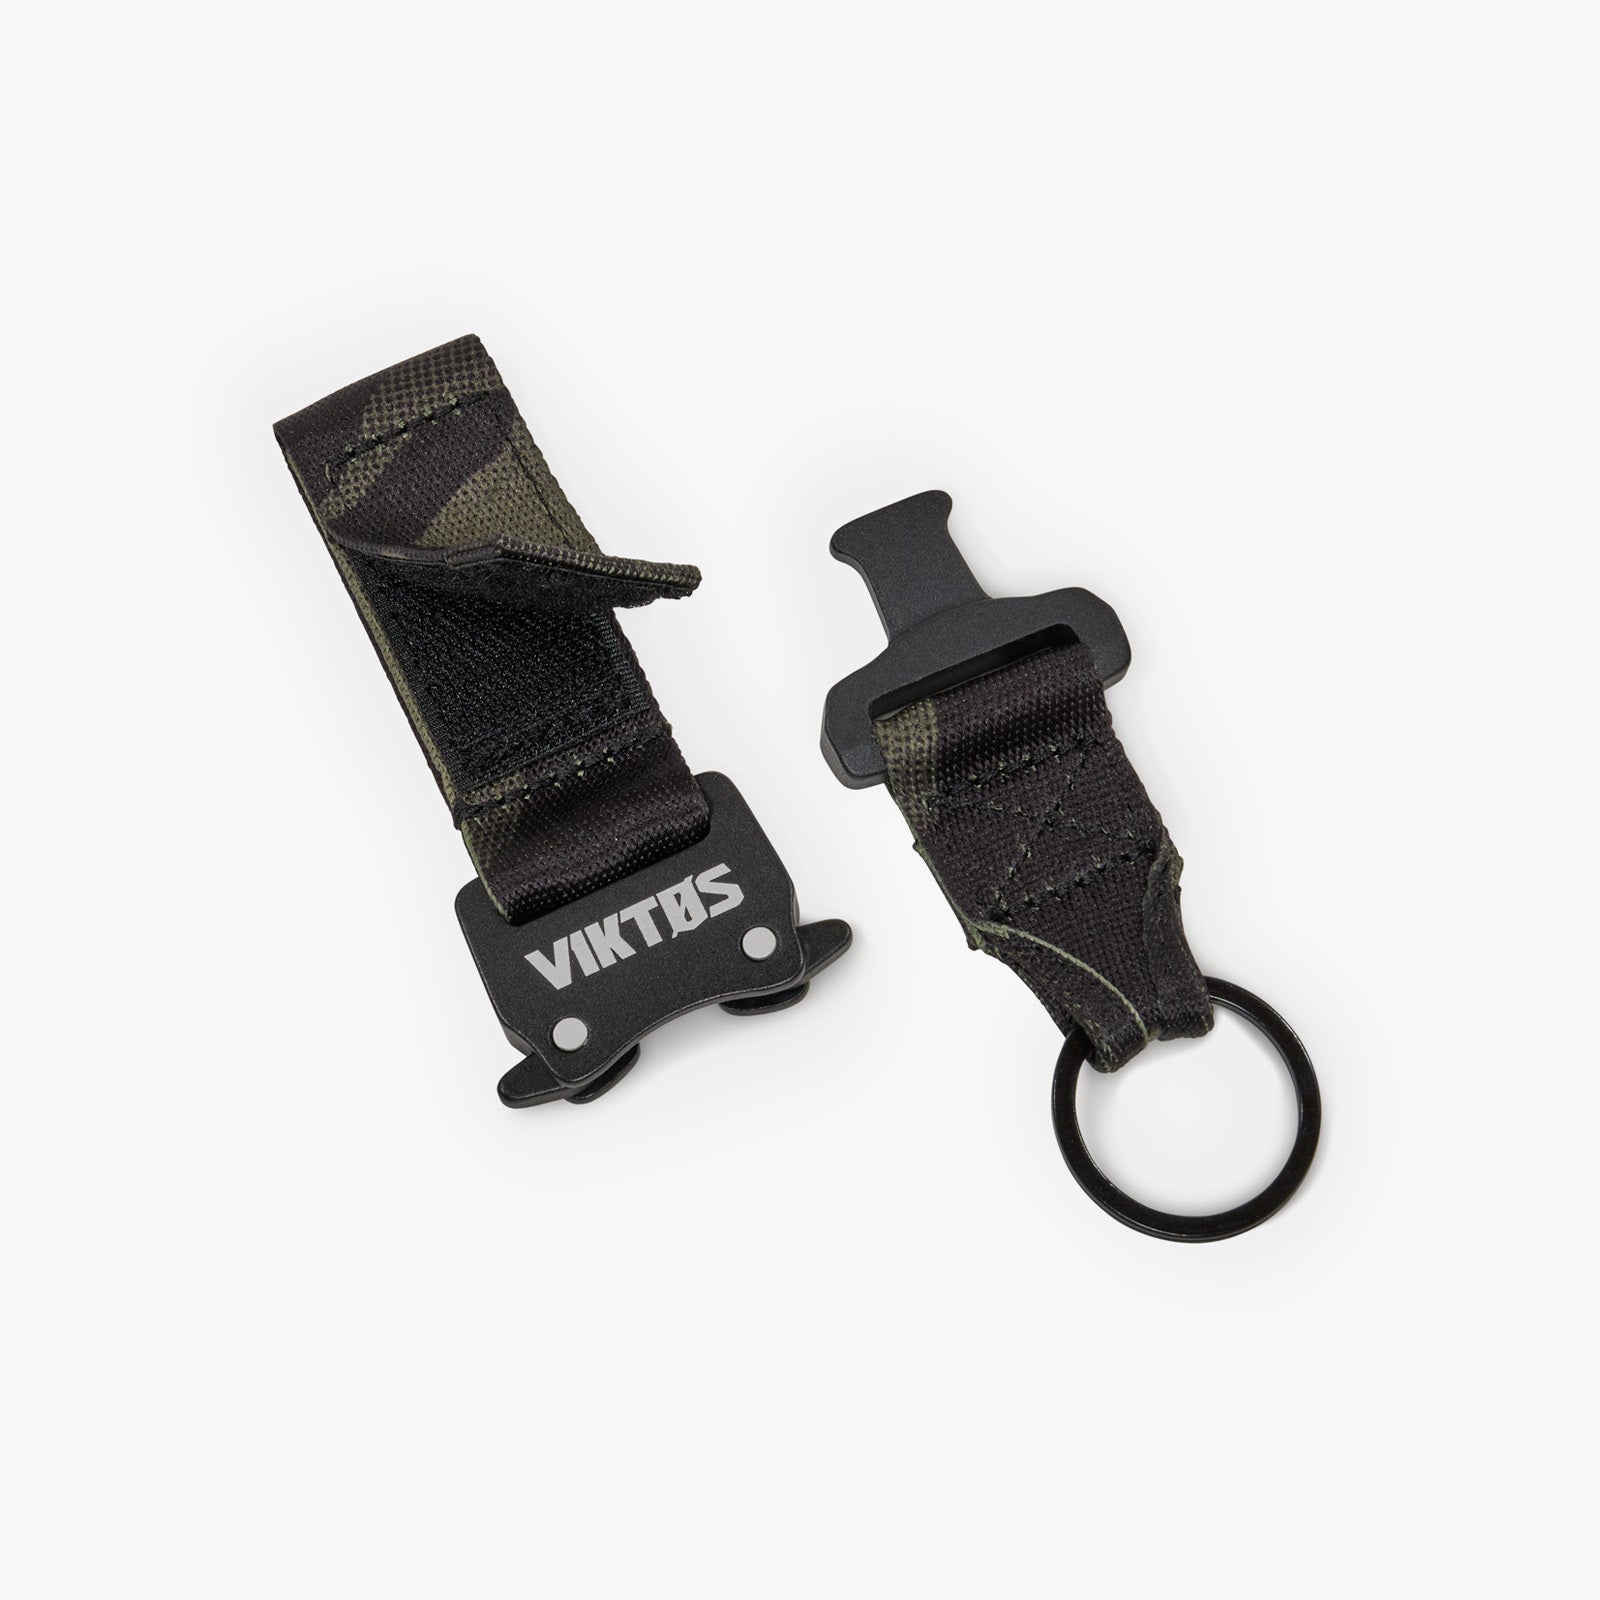 VIKTOS Bulldog Keychain Accessories VIKTOS Black Camo Tactical Gear Supplier Tactical Distributors Australia